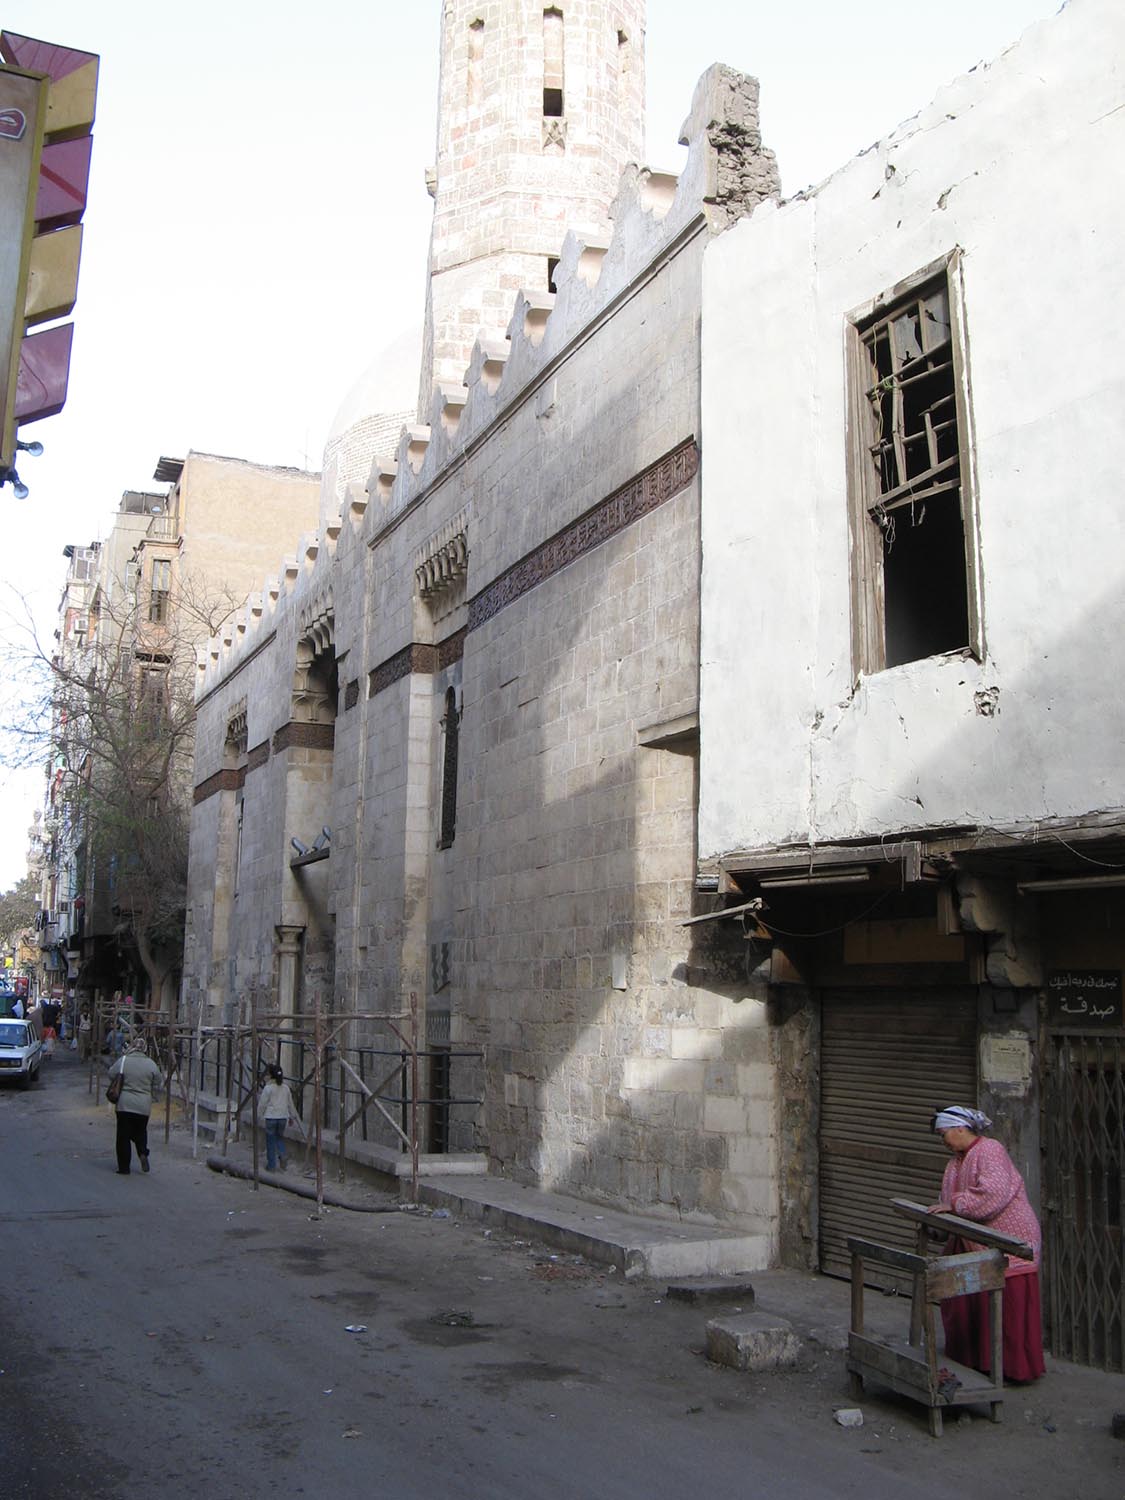 View of facade under renovation.